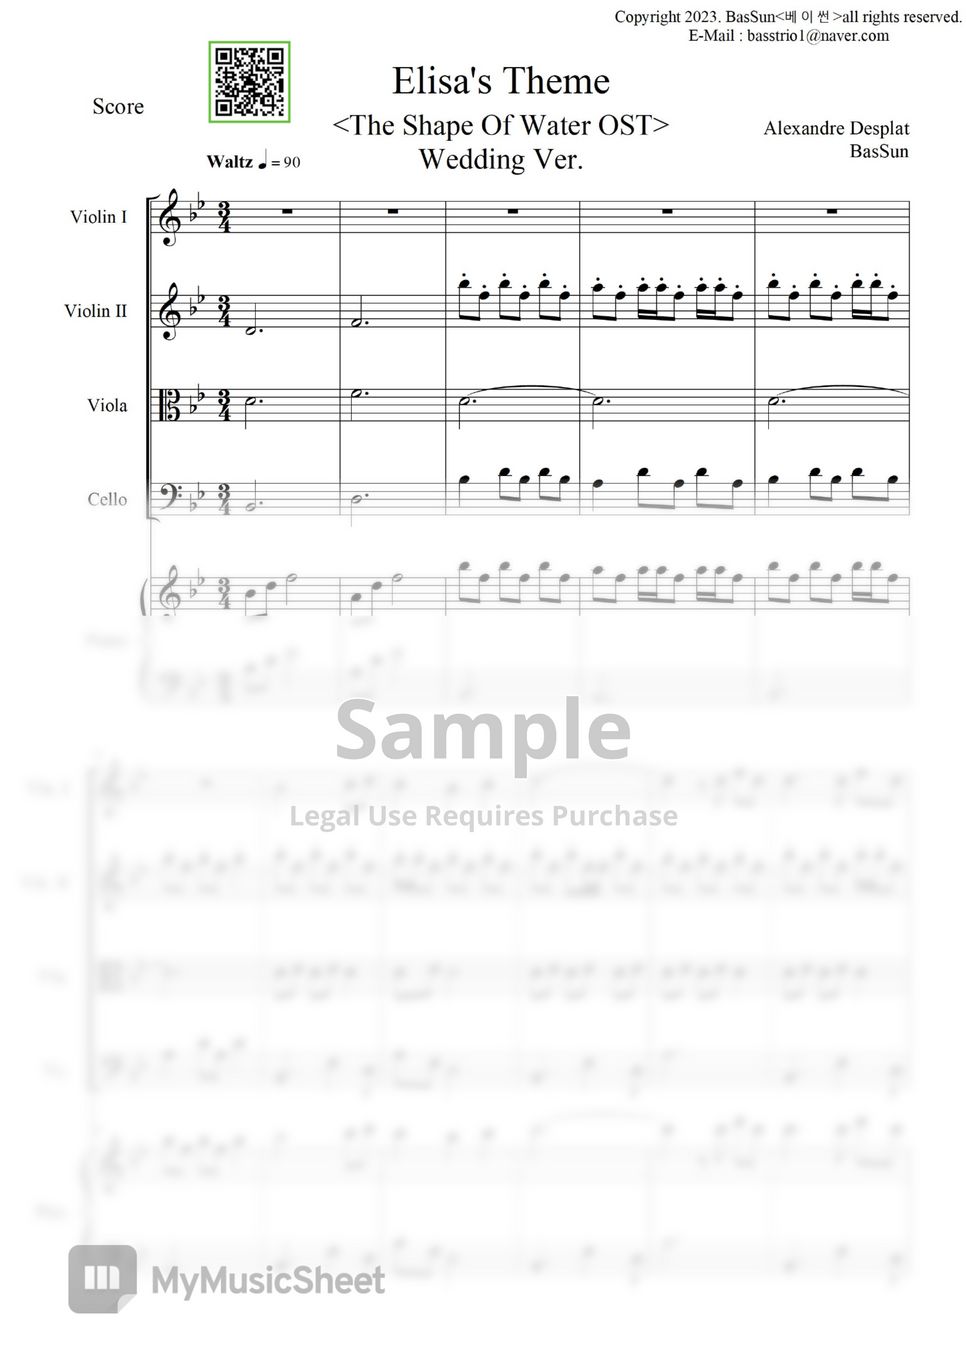 Alexandre Desplat - Elisa's Theme (Classic Piano Quartet / Arrangement / The Shape Of Water OST) by BasSun